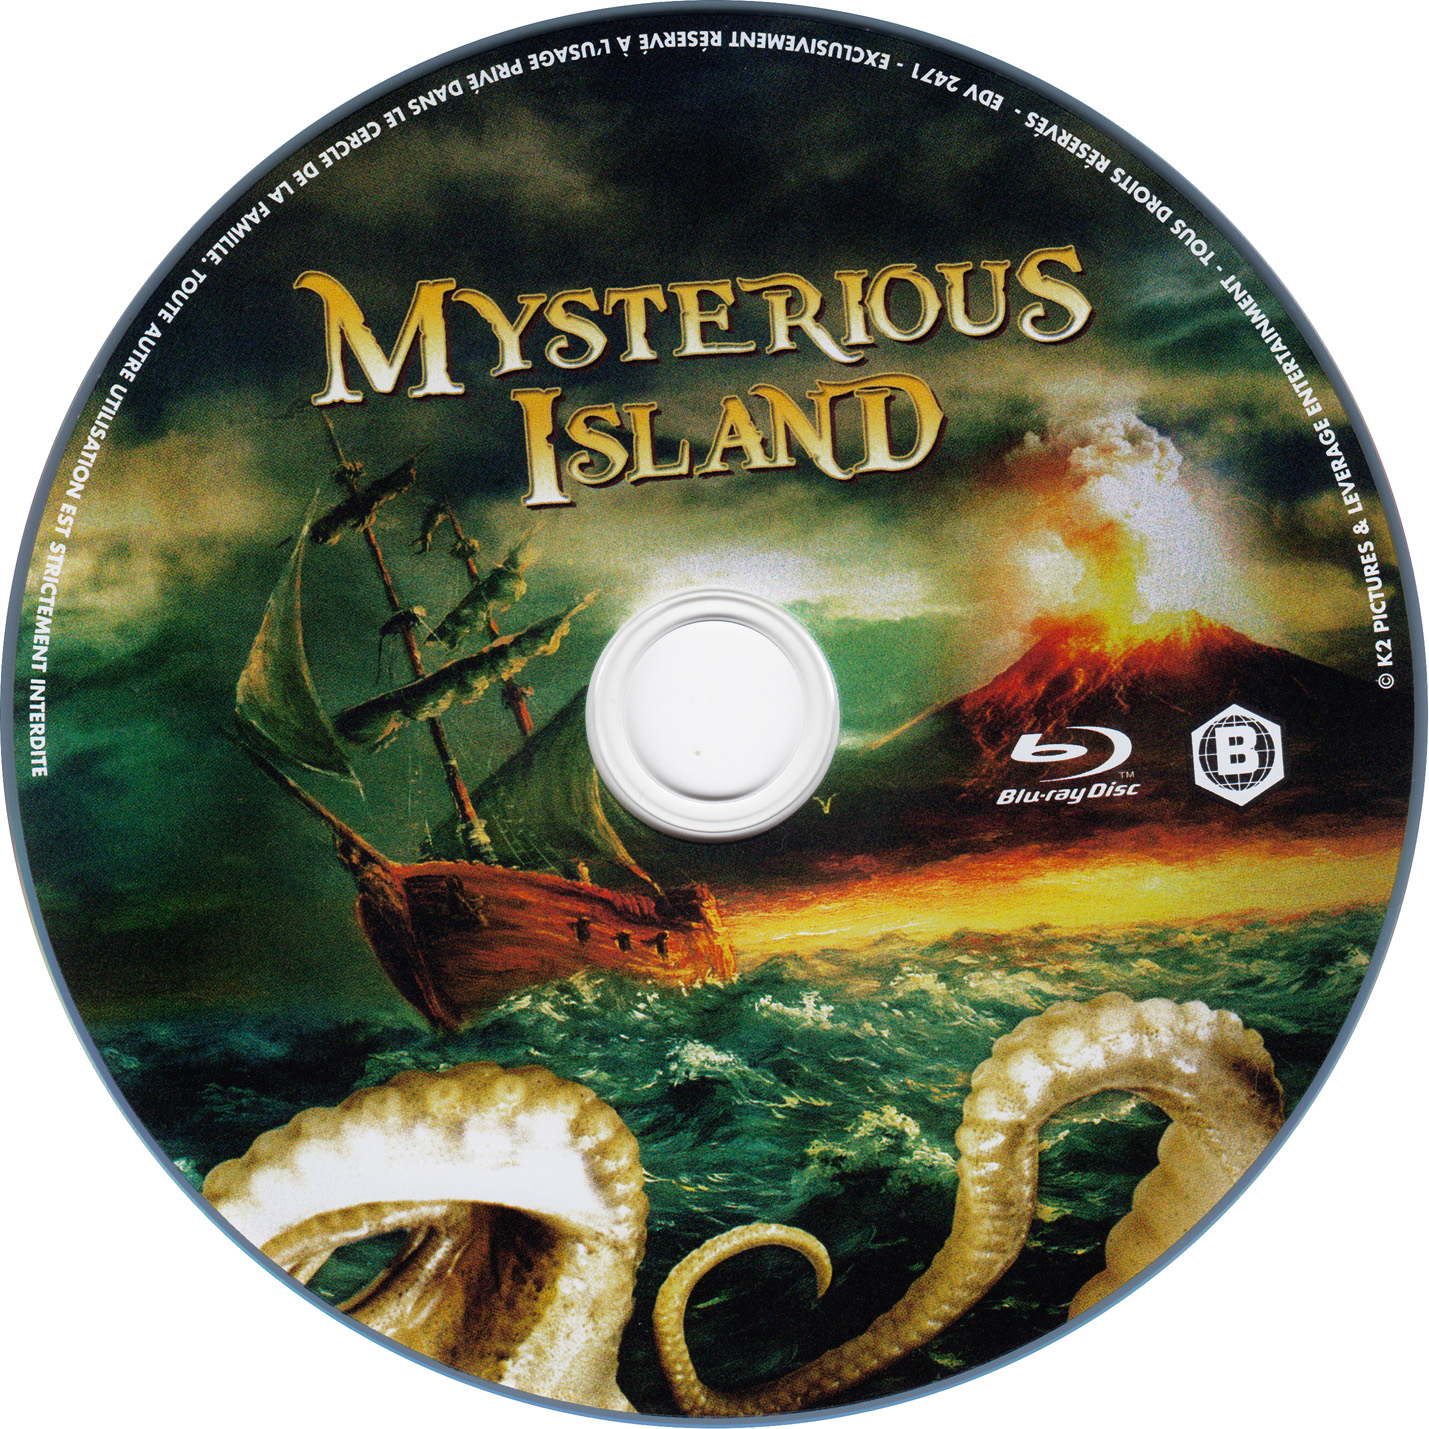 Mysterious island (BLU-RAY)